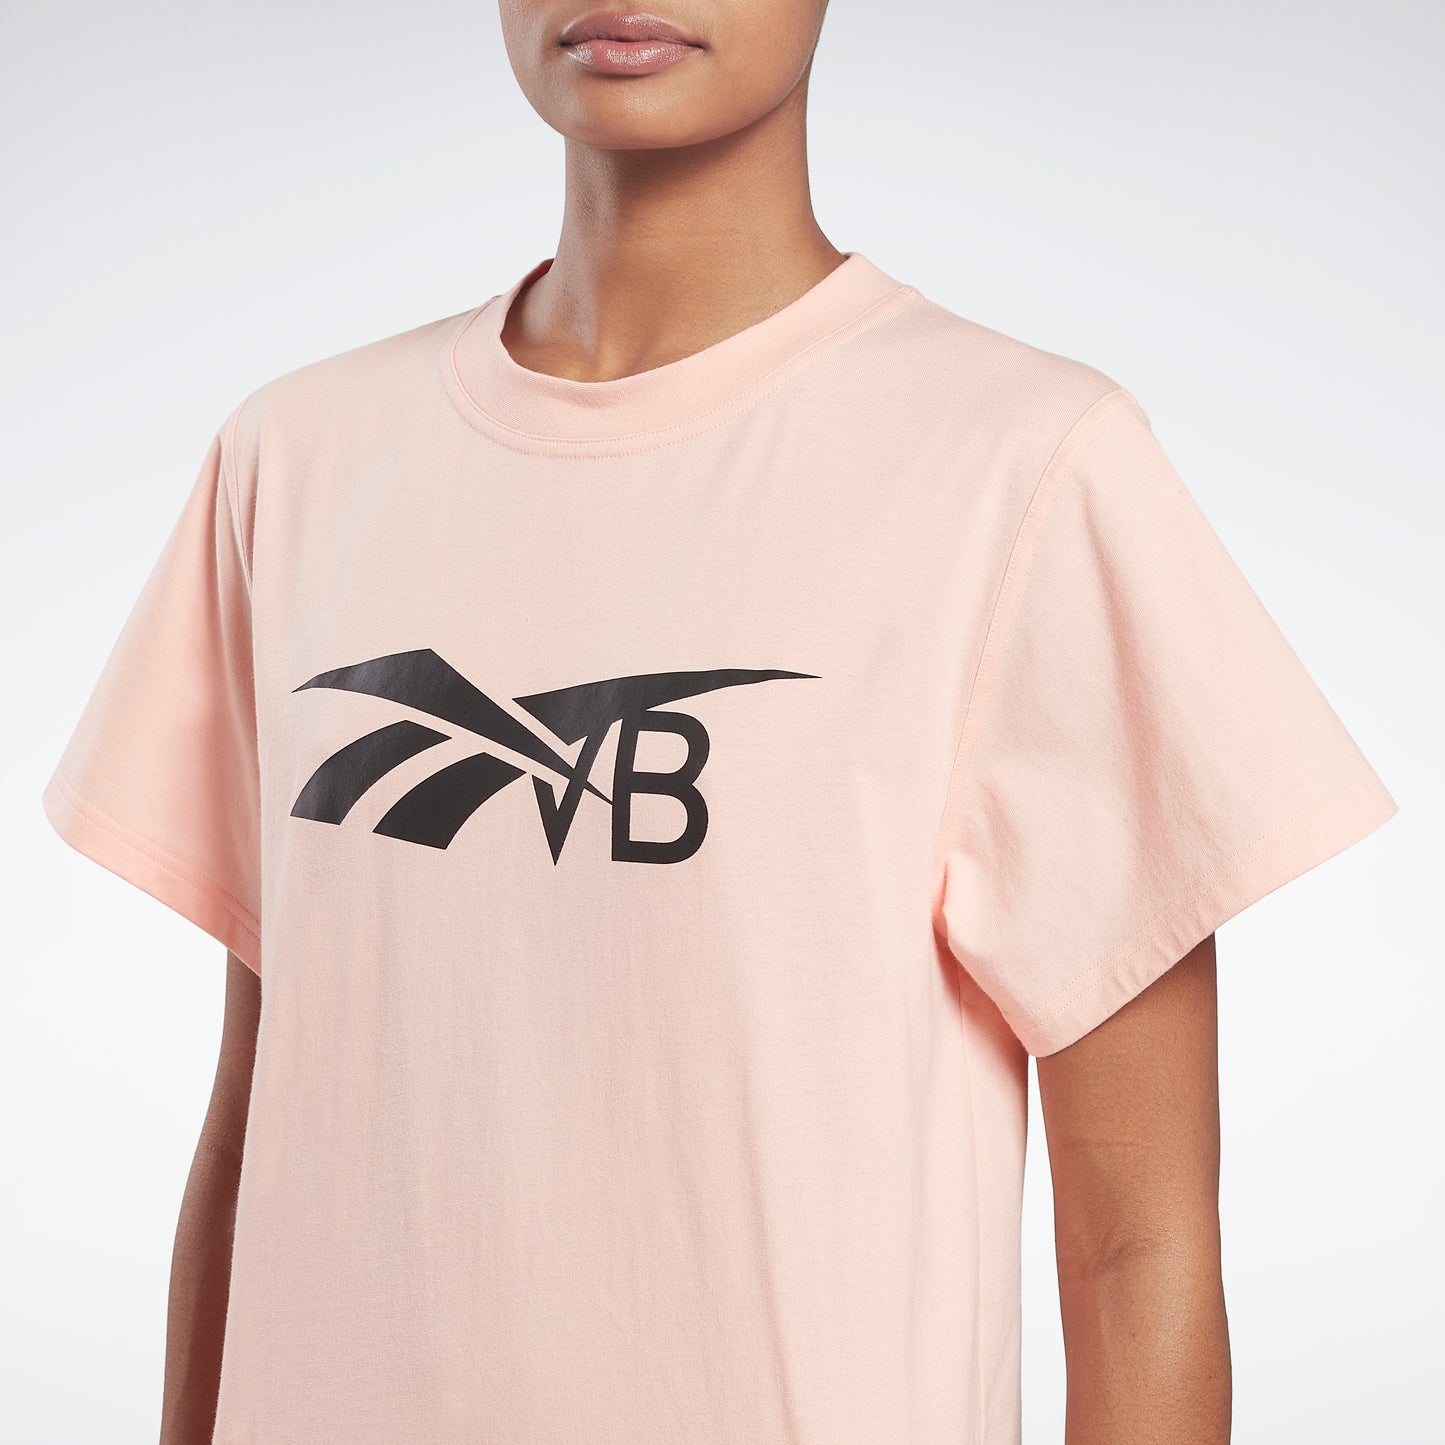 Victoria Beckham T-Shirt Coral Glow